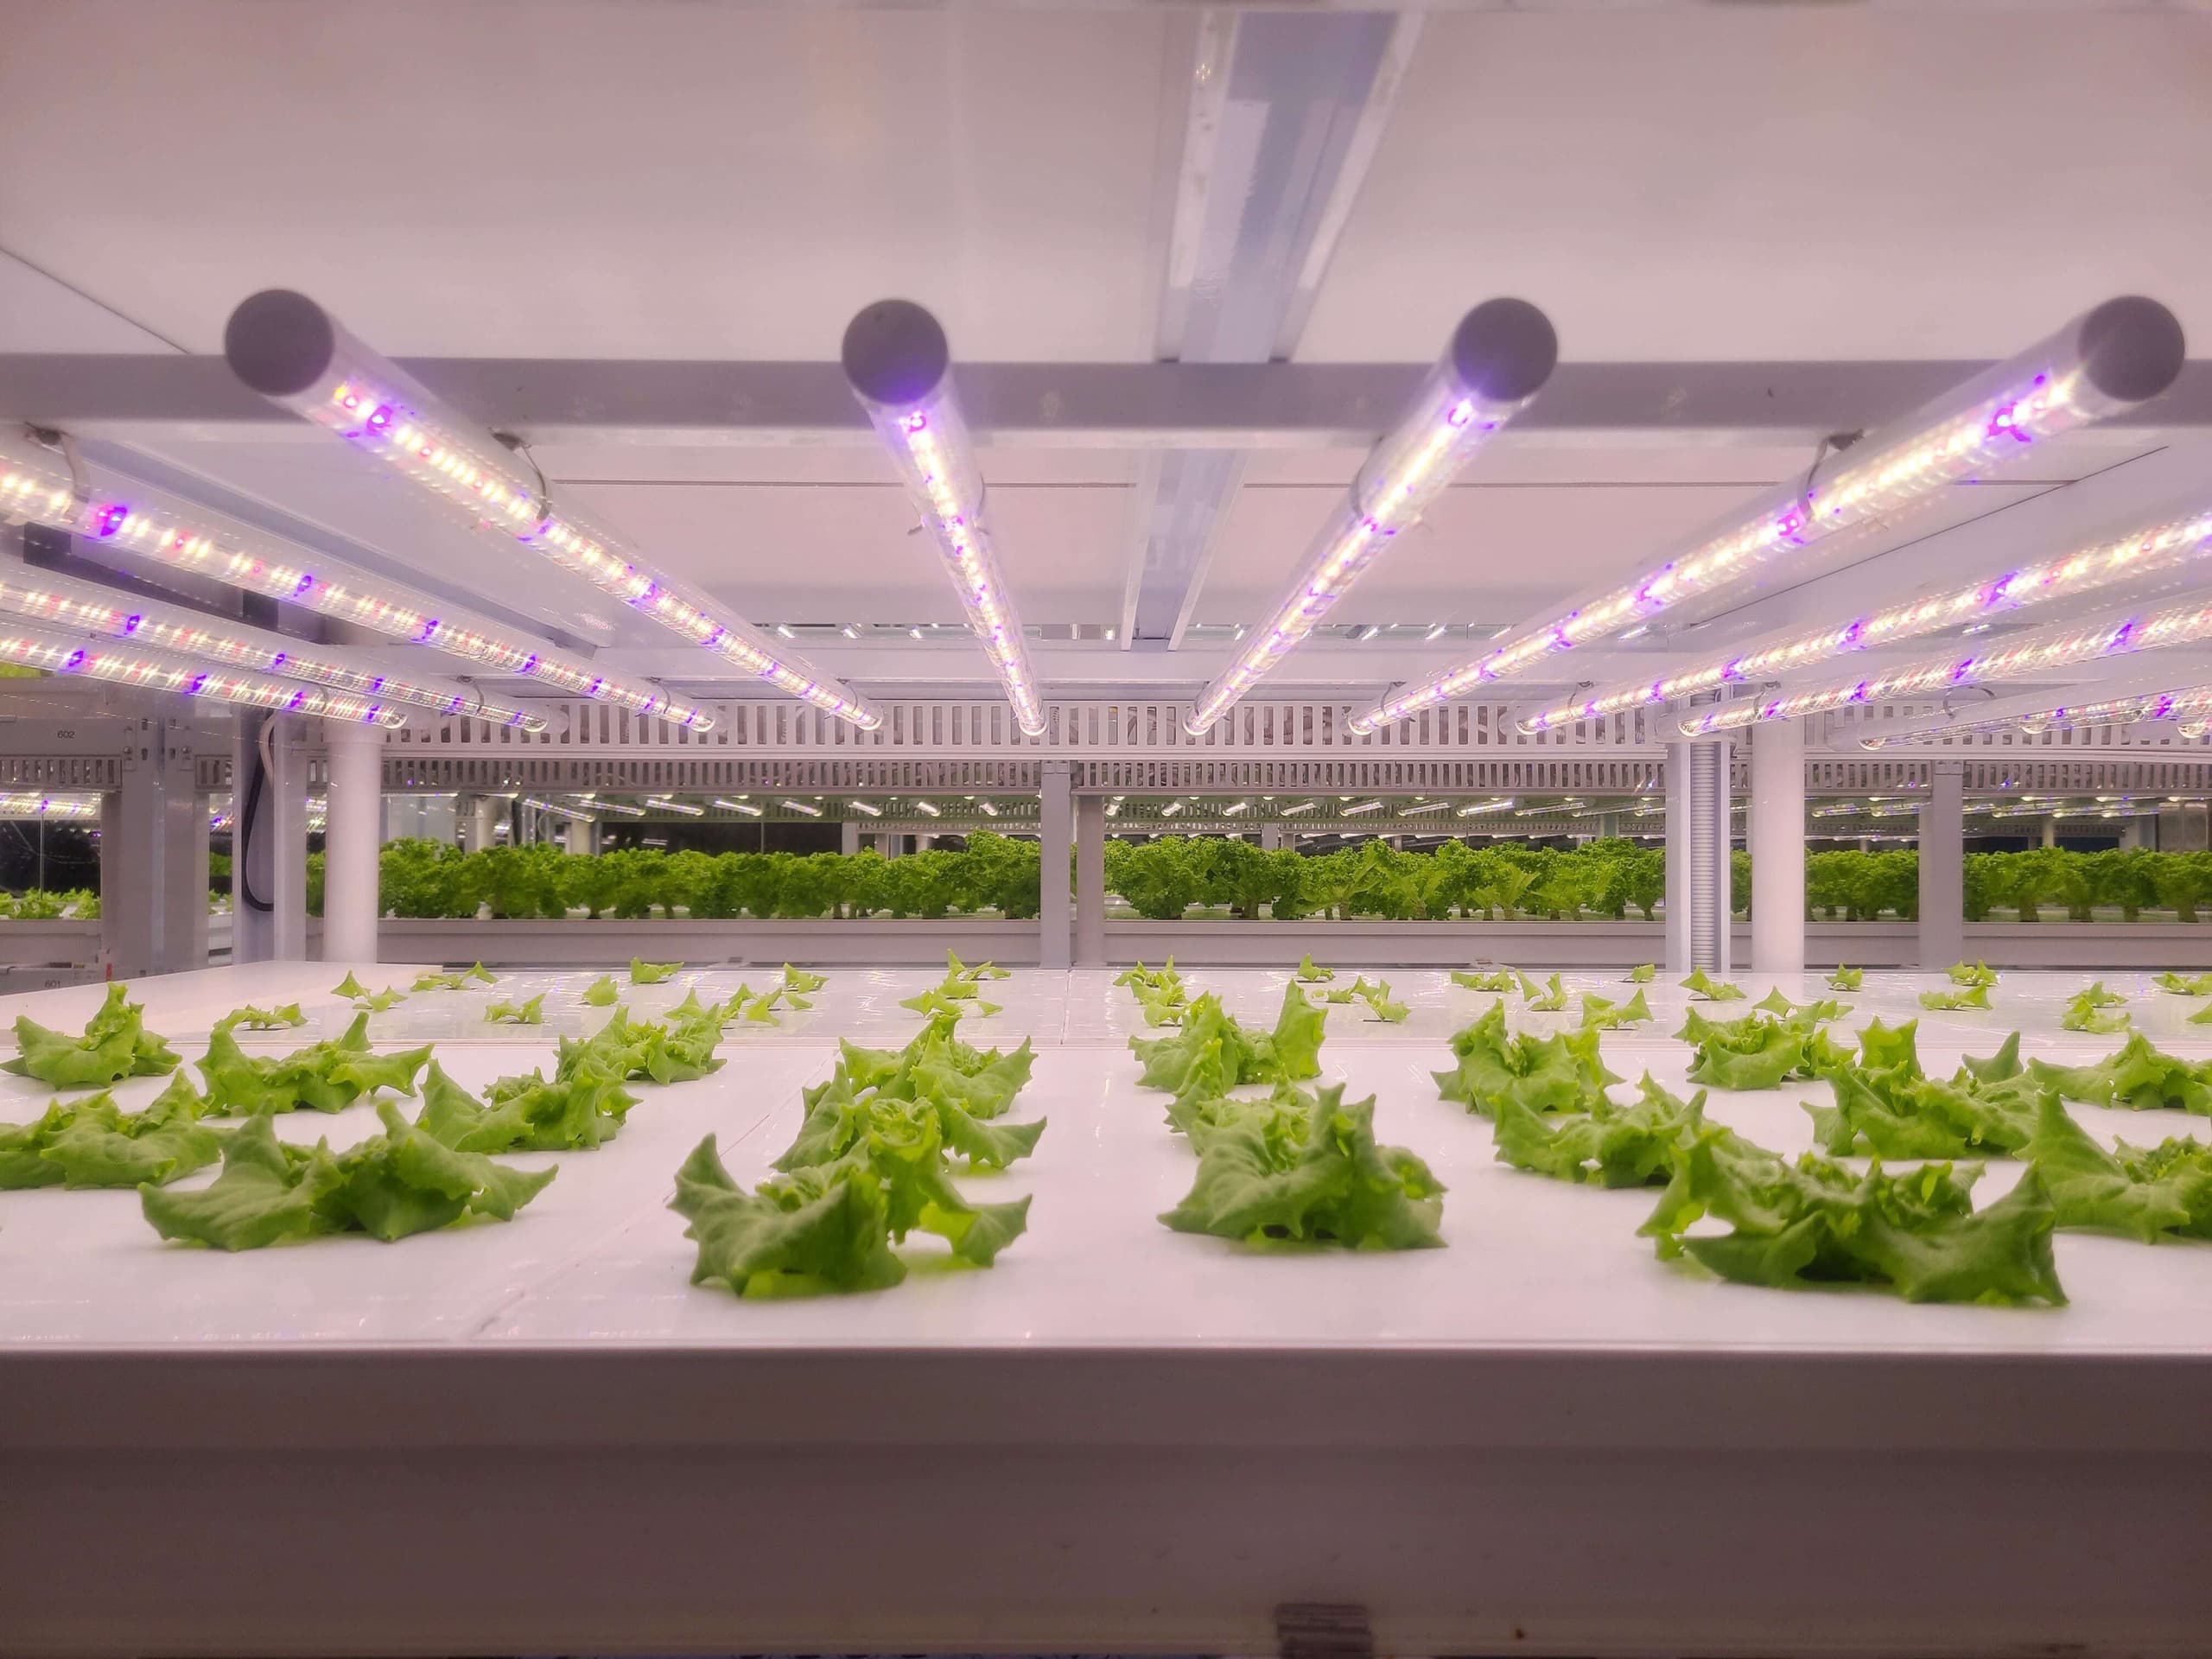 vegetables-are-growing-in-indoor-farm-vertical-far-2022-12-31-05-13-21-utc-min.jpg